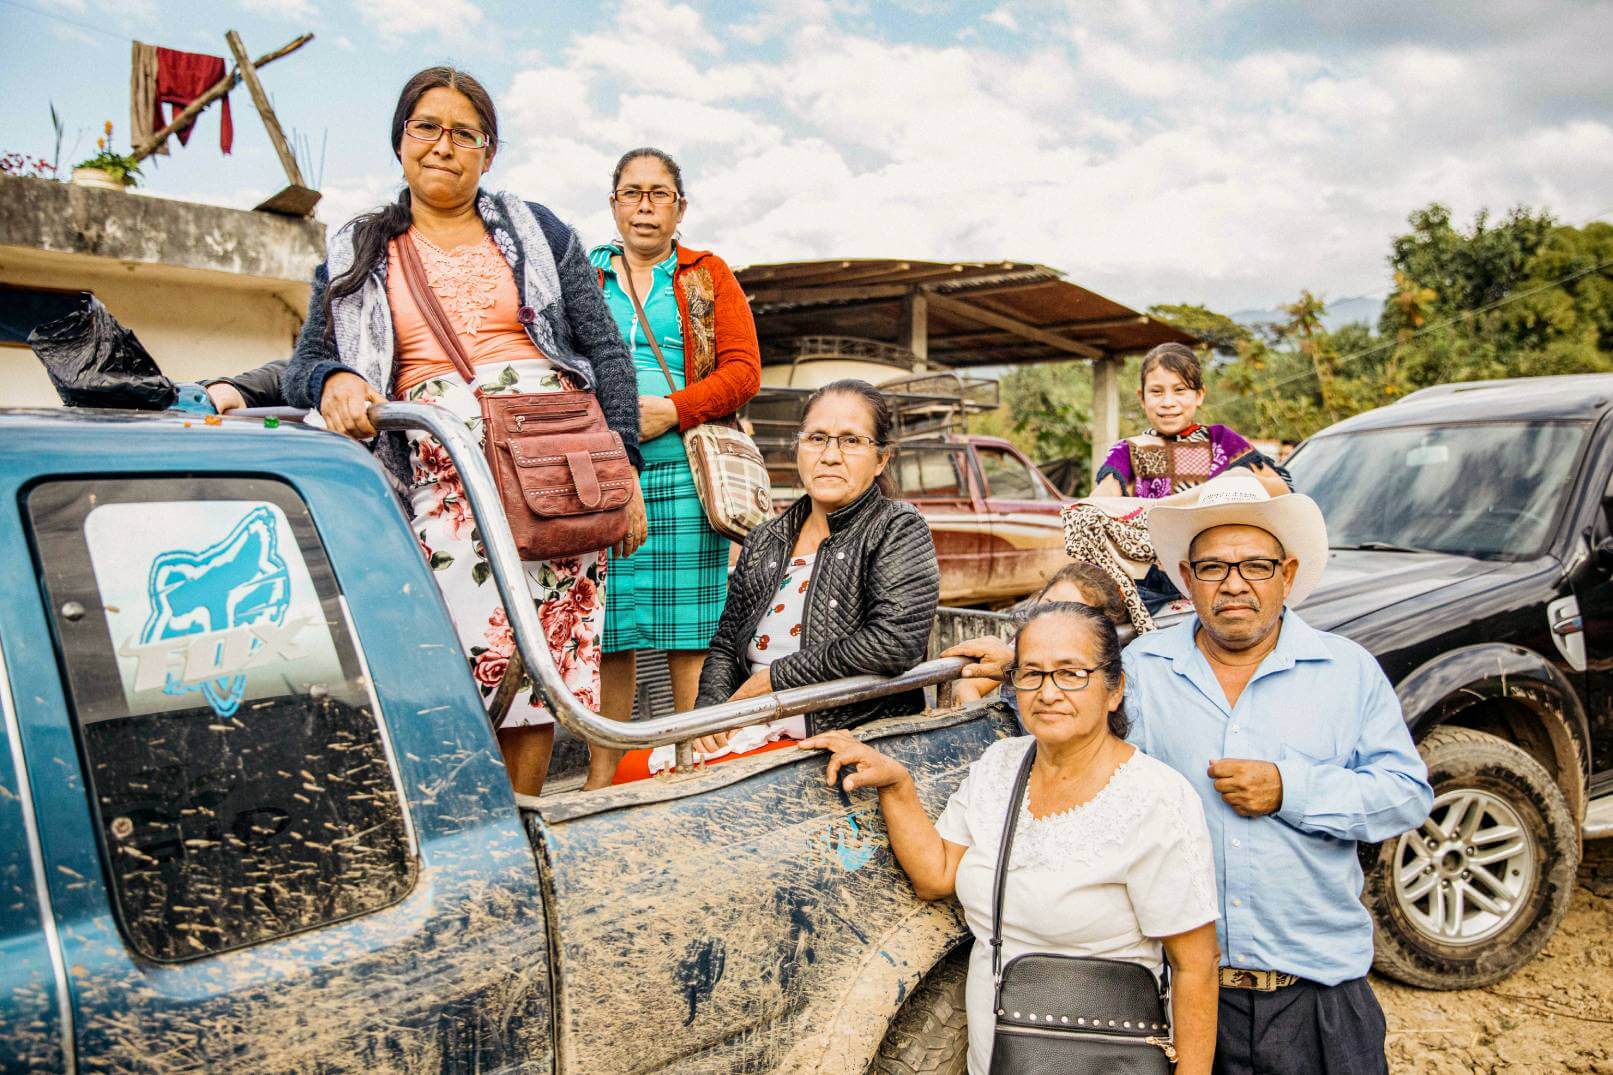 People from Guatamela farm